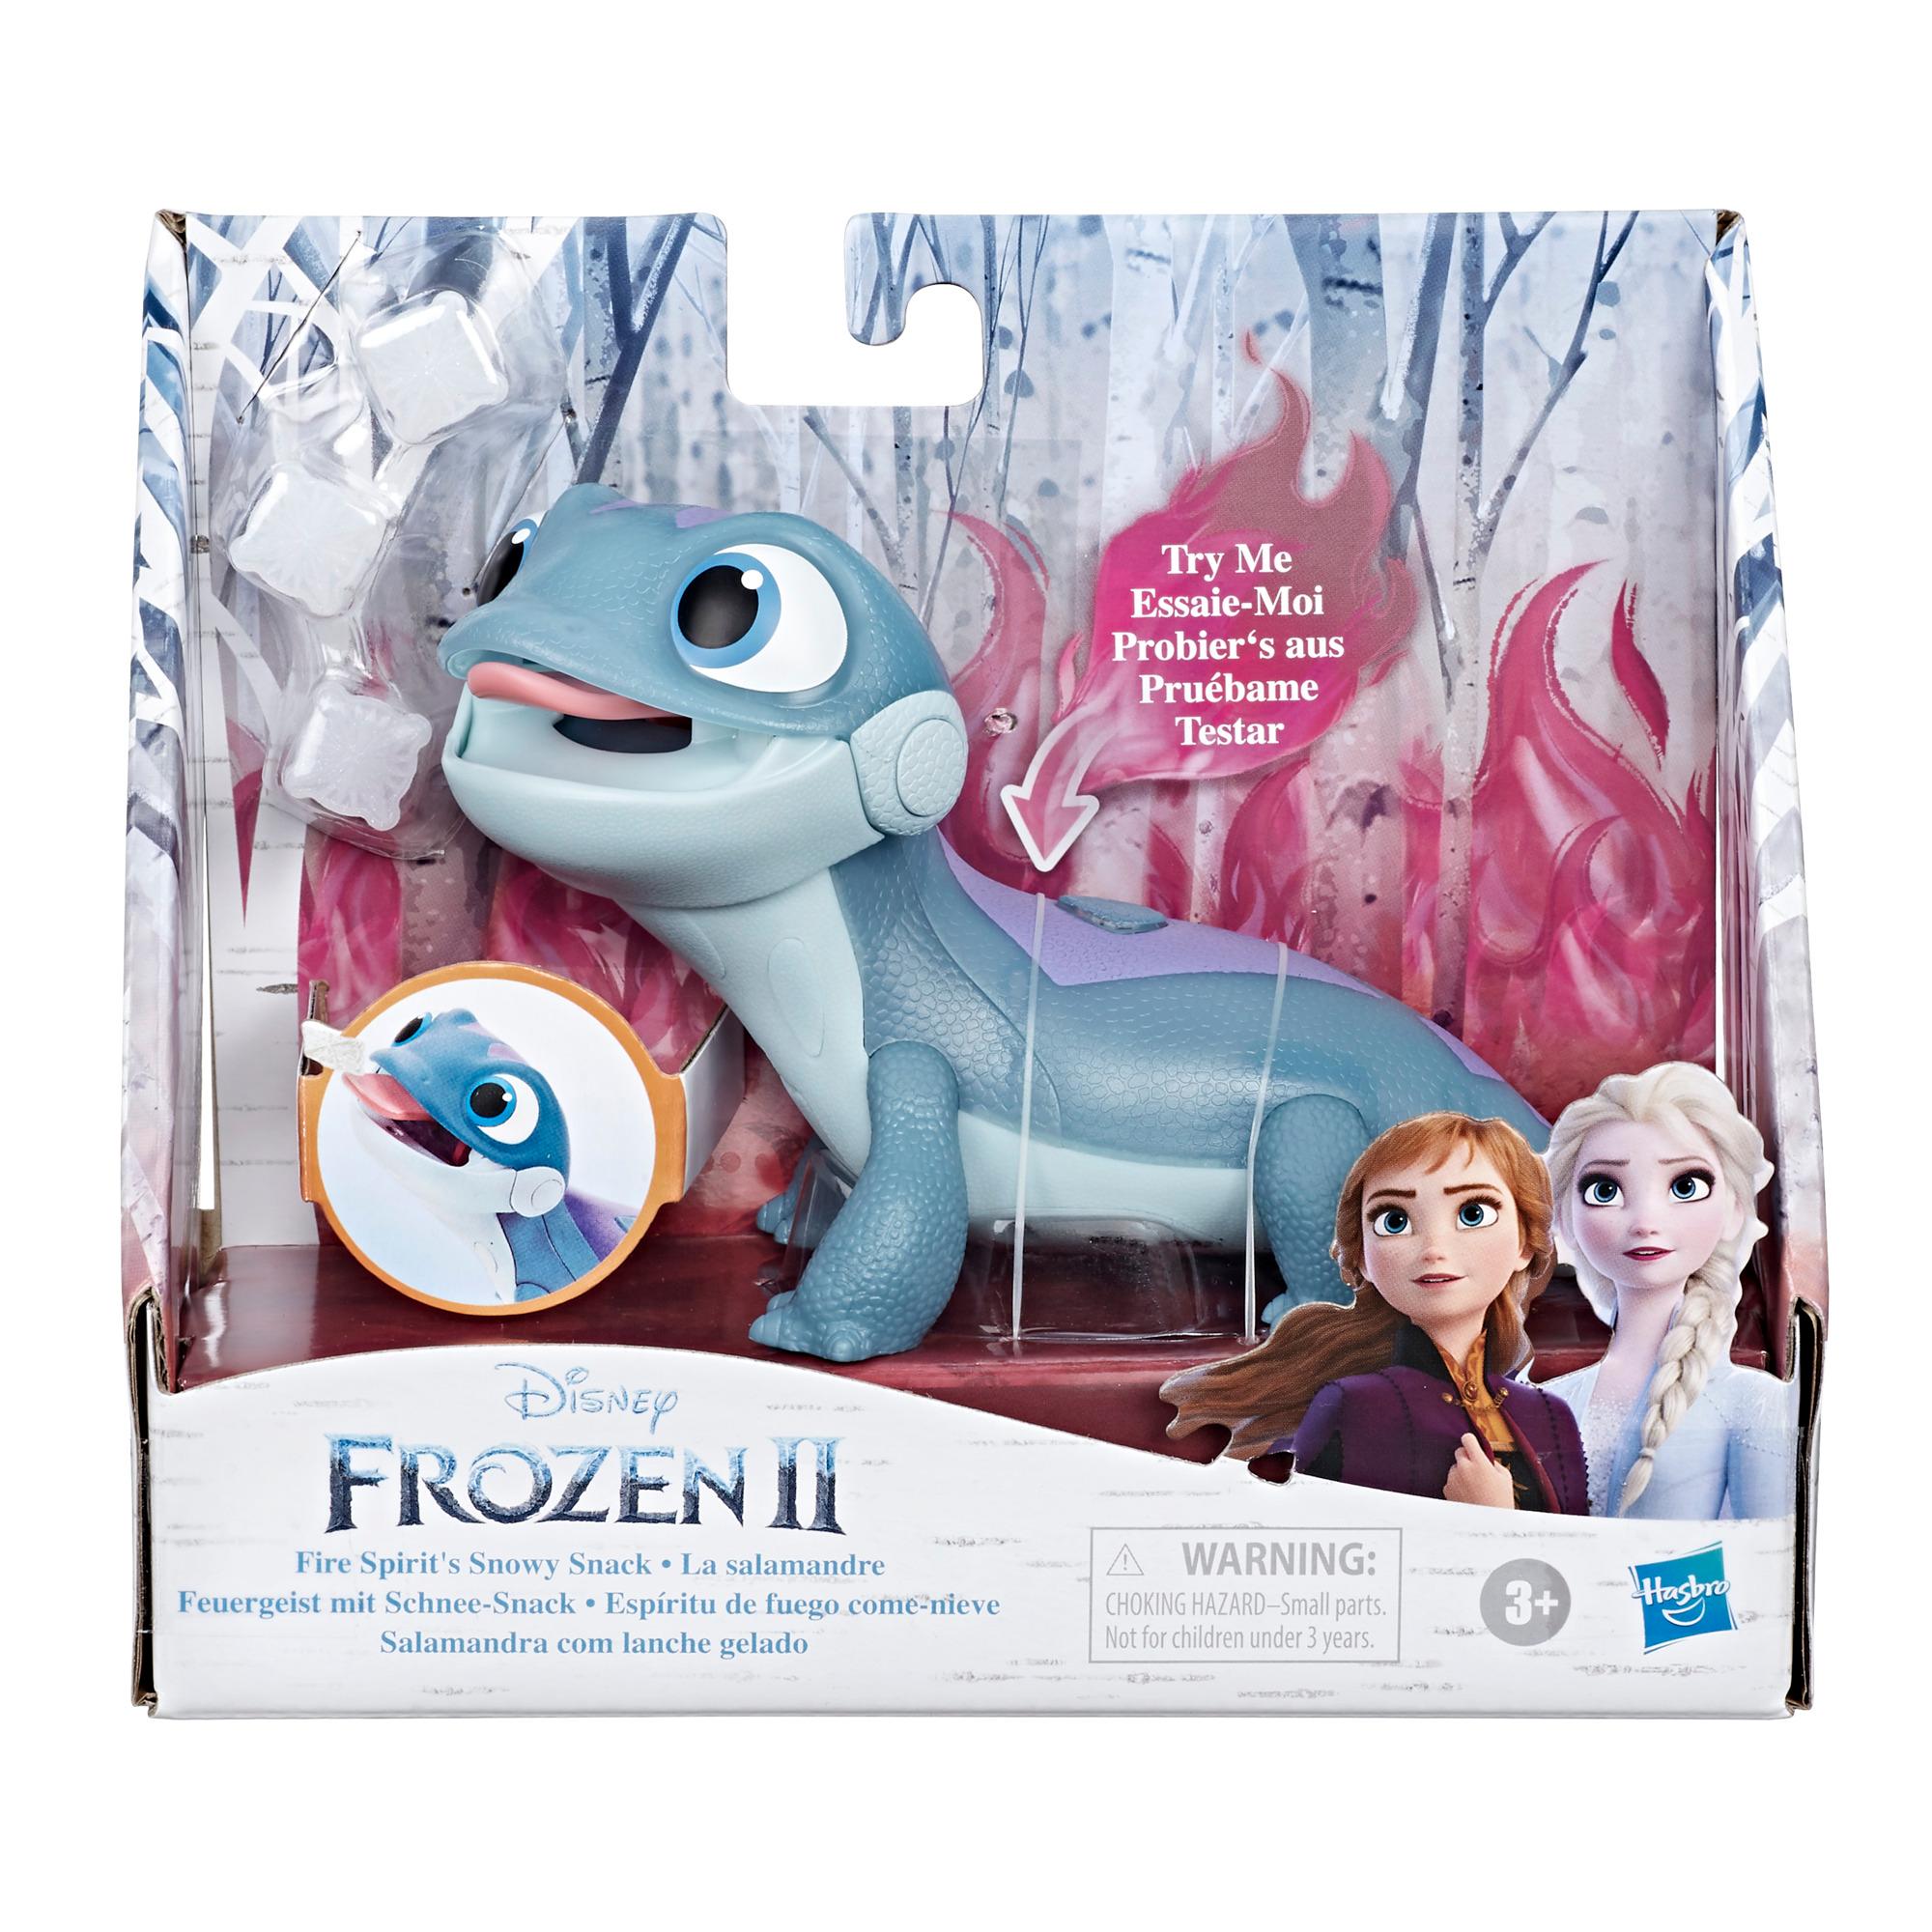 Disney Frozen Fire Spirit's Snowy Snack, Salamander Toy with Lights, Inspired by Disney's Frozen 2 Movie